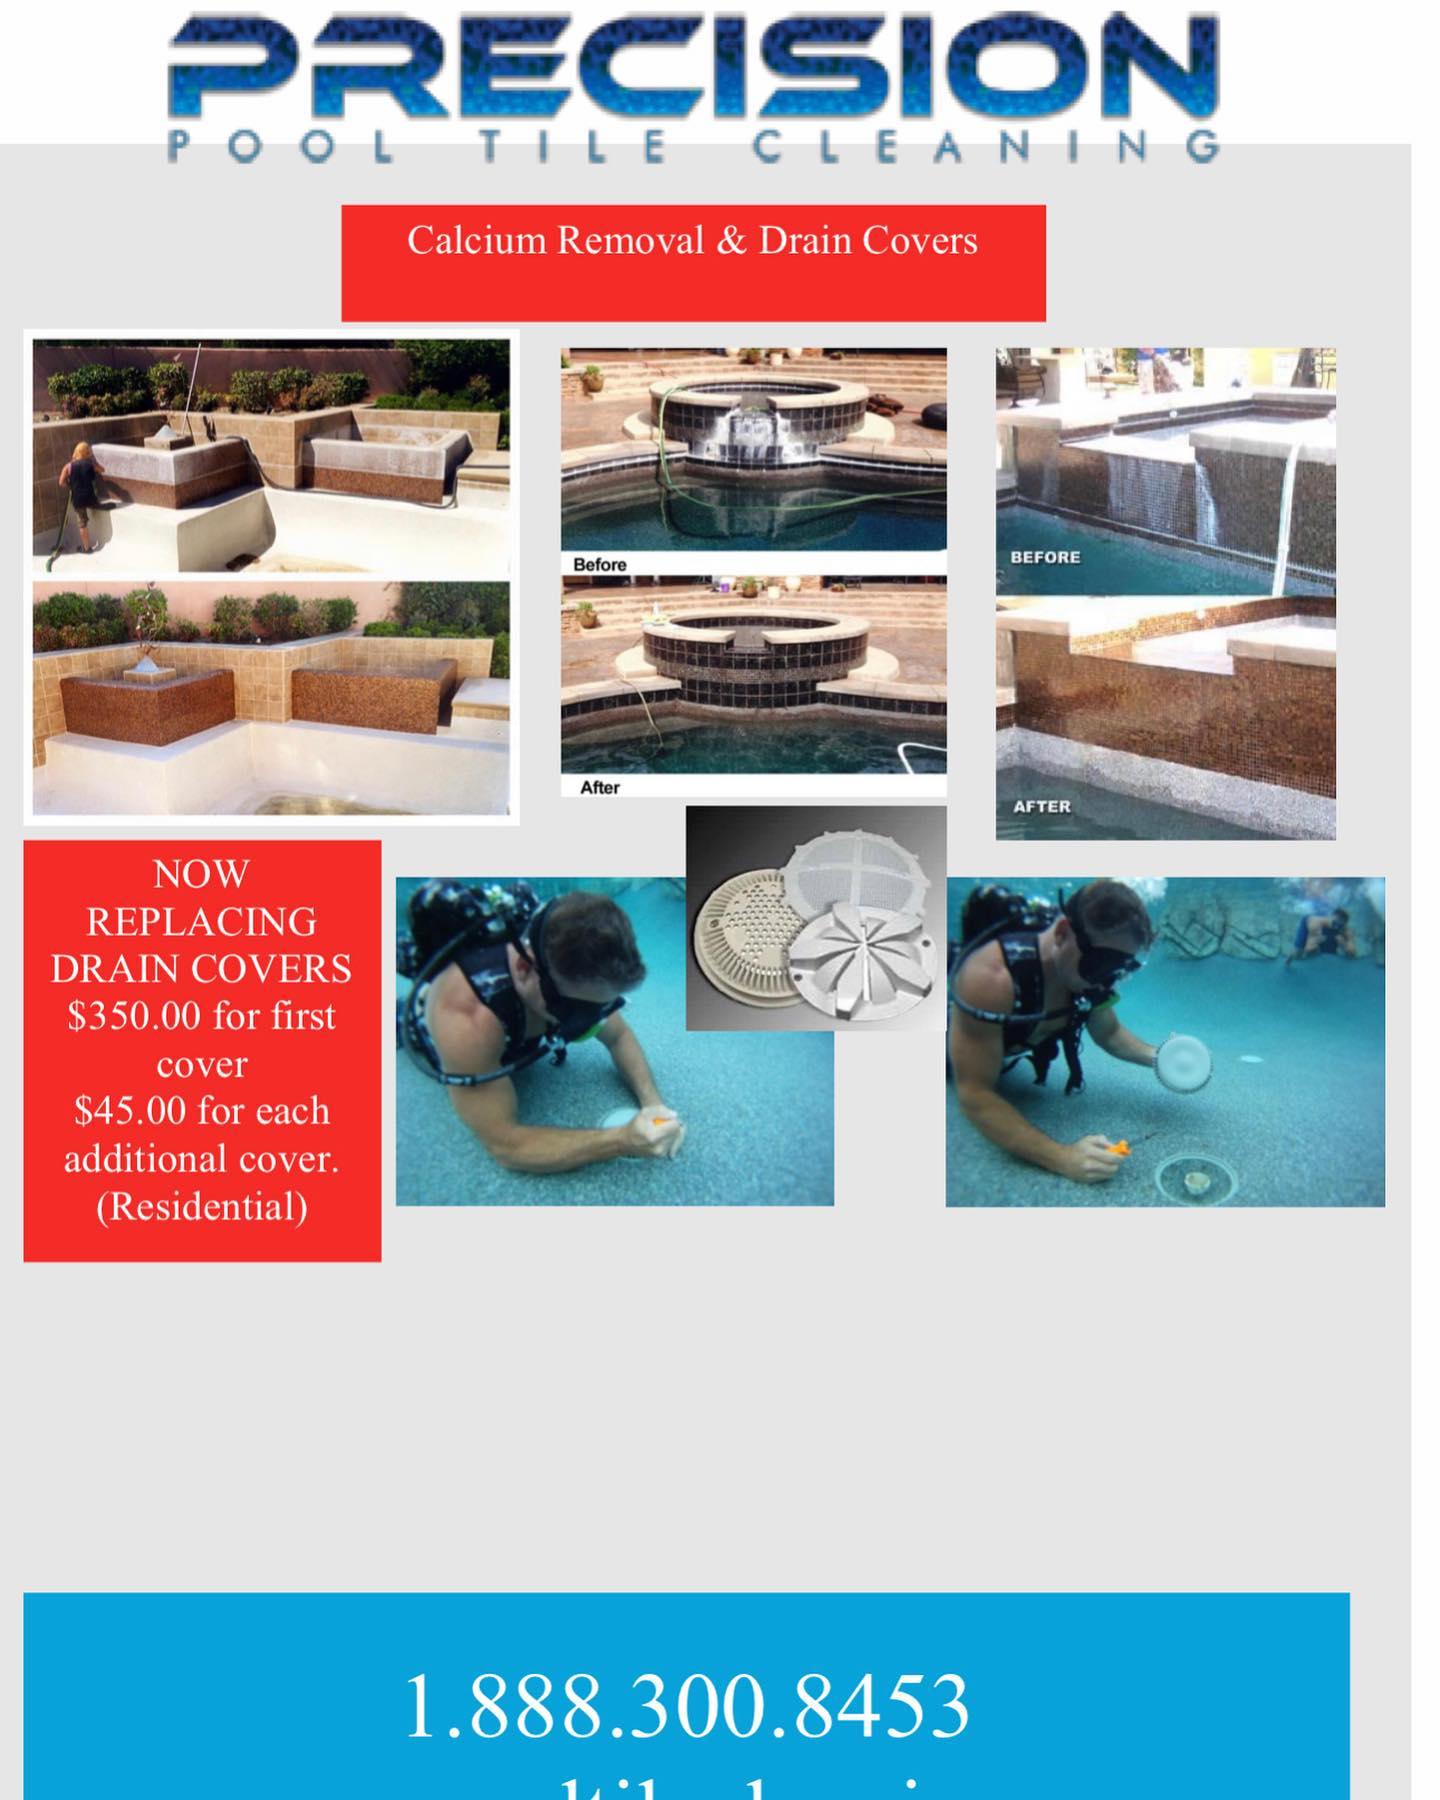 Precision Pool Tile Cleaning INC. 12672 Limonite Ave. Ste 3E #540, Eastvale California 92880